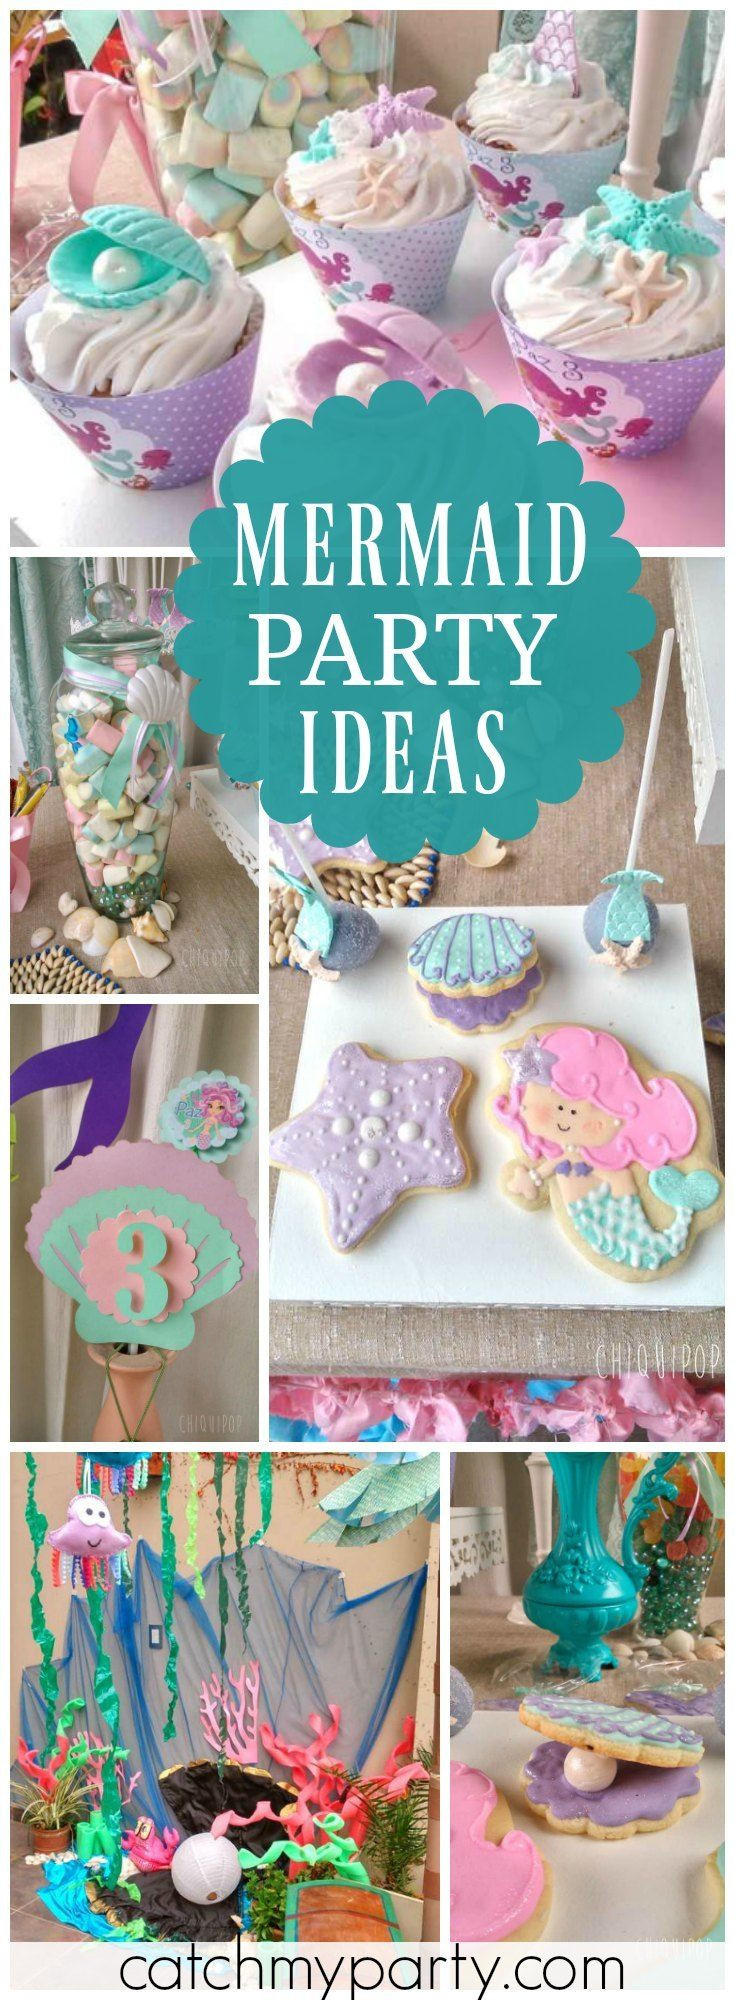 Mermaid Birthday Party Ideas Pinterest
 1000 images about Mermaid Party Ideas on Pinterest